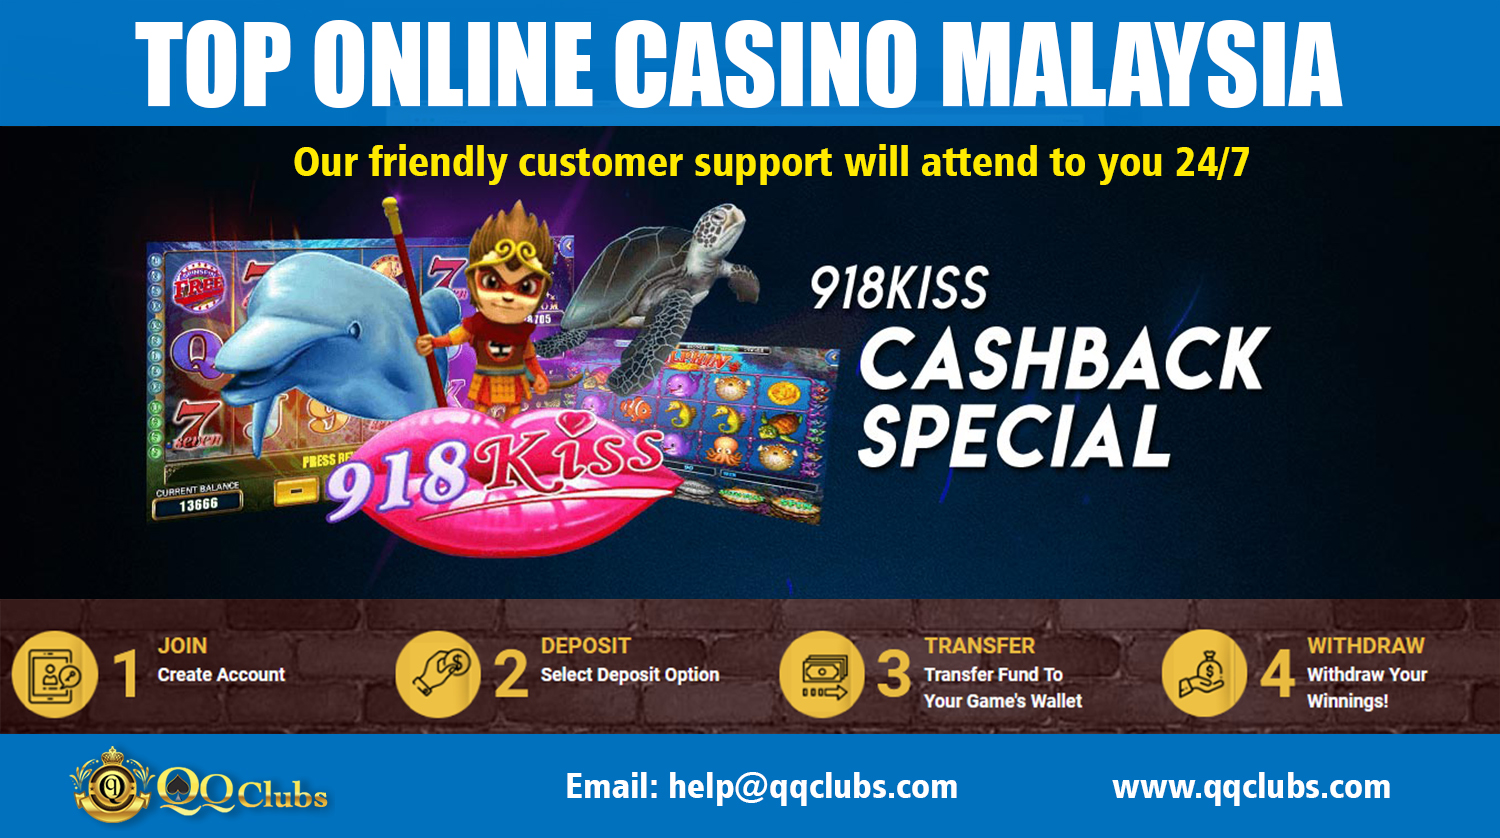 Trusted online casino malaysia 2019 ipb столото 5х36 архив тиражей